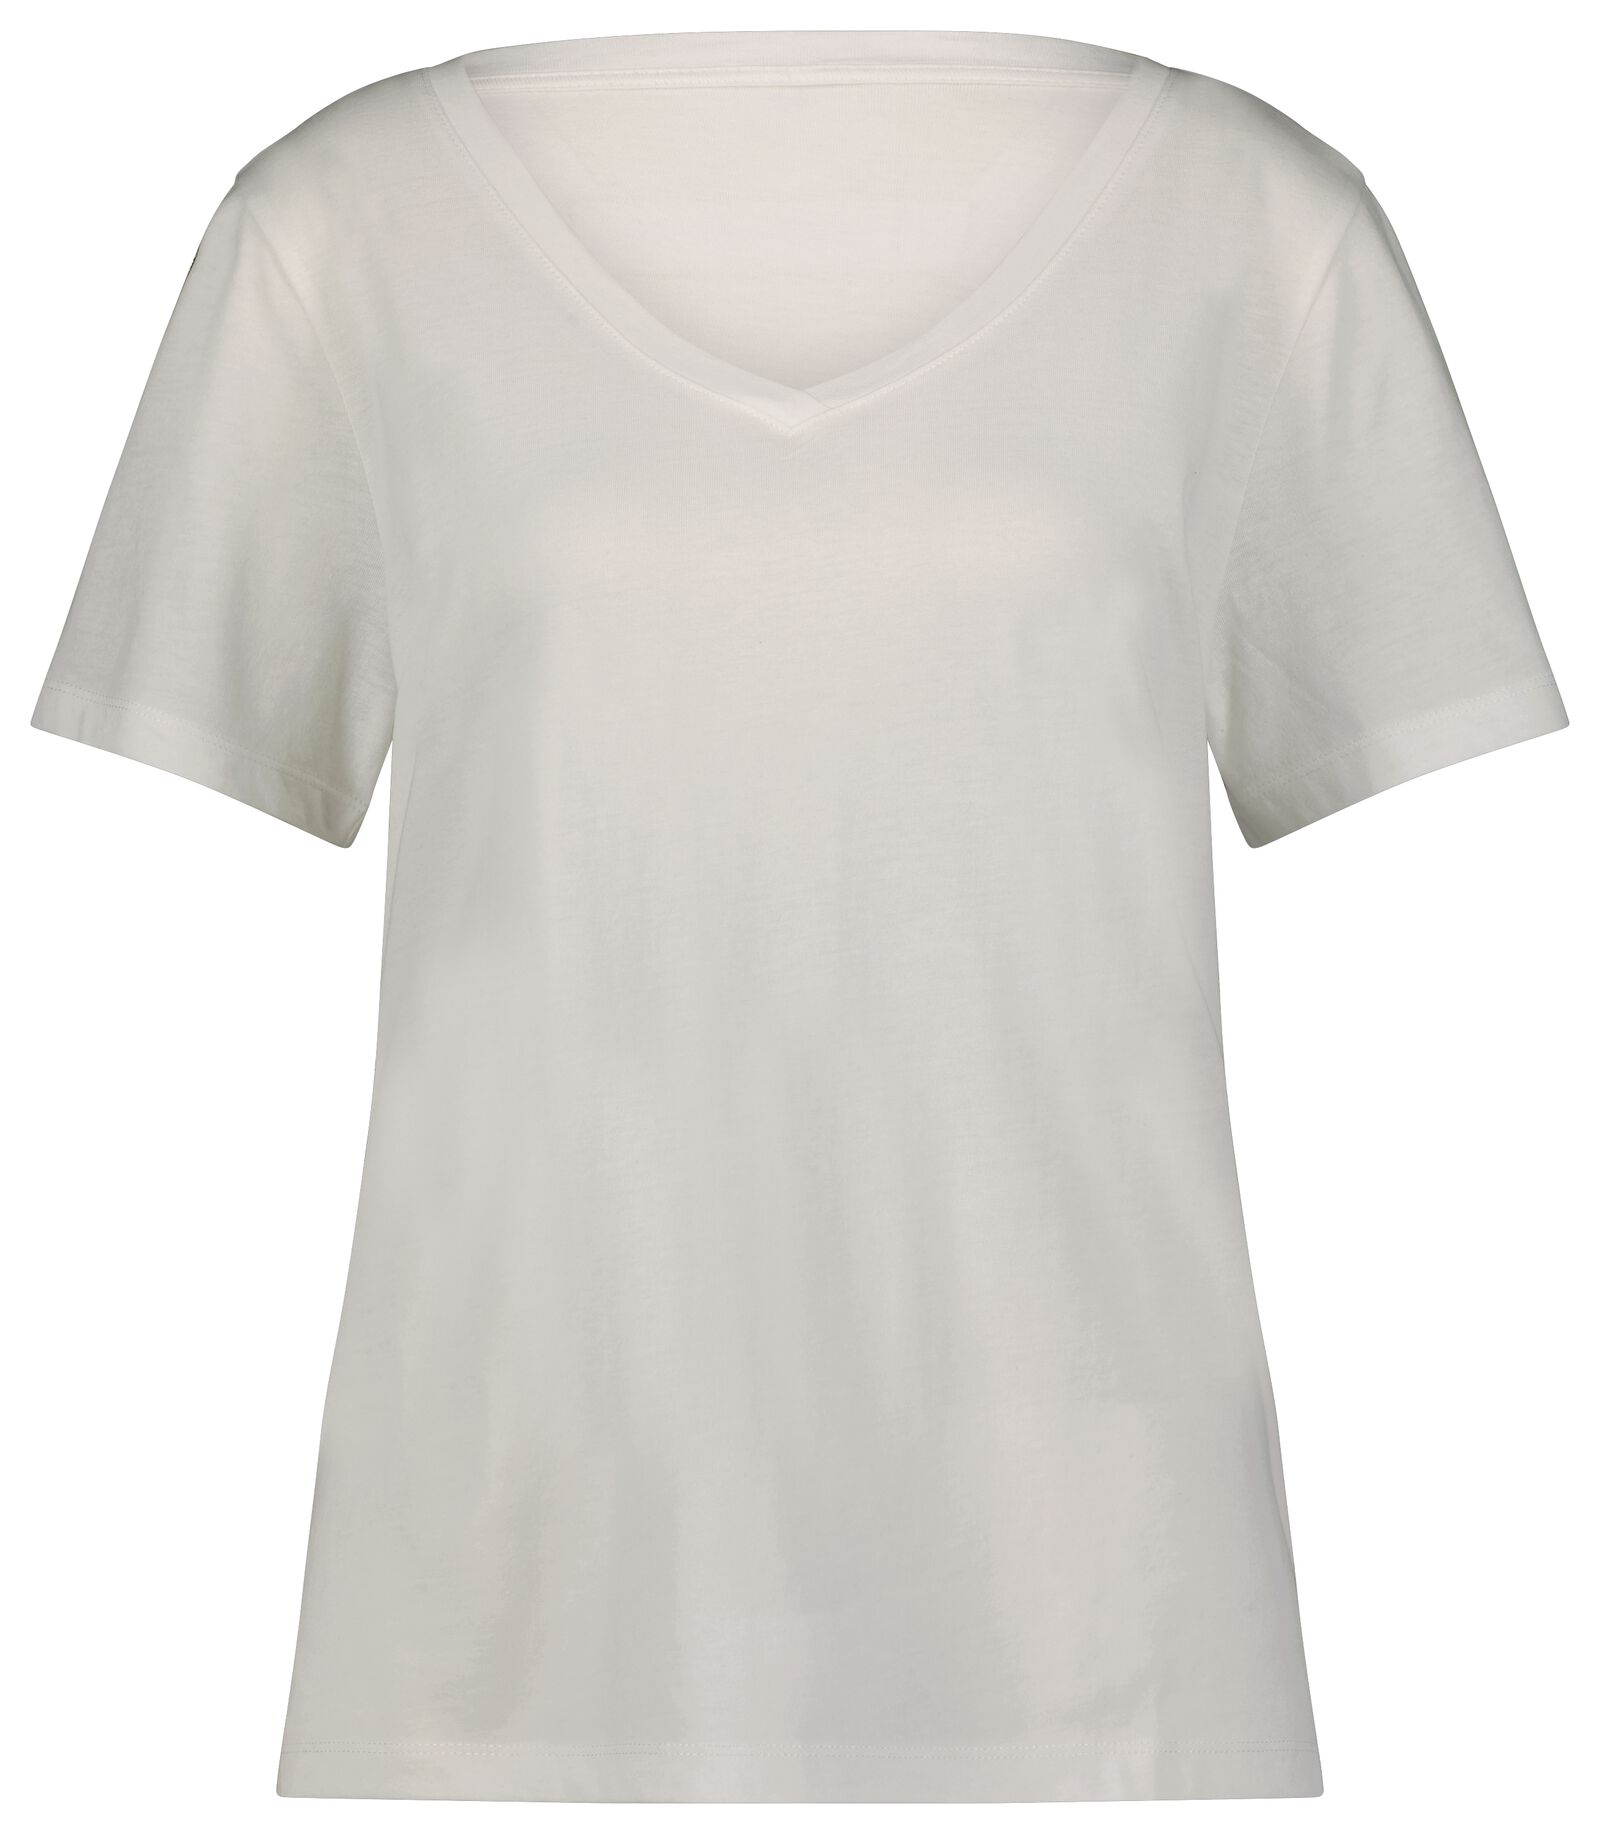 dames t-shirt Danila met bamboe wit wit - 1000027543 - HEMA